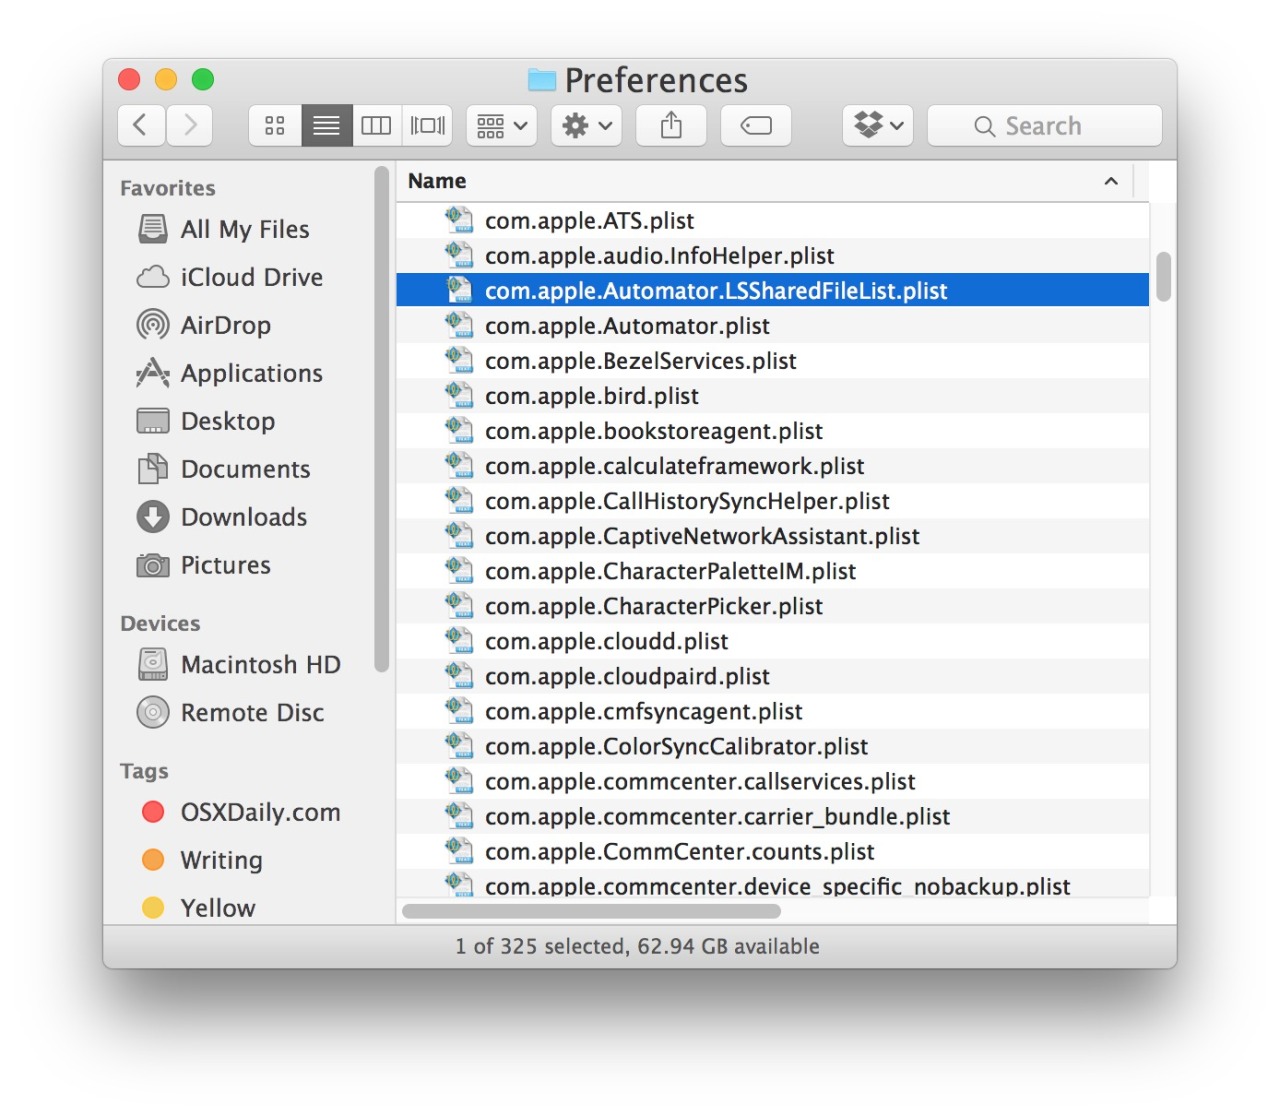 dolphin emulator mac 10.6.8